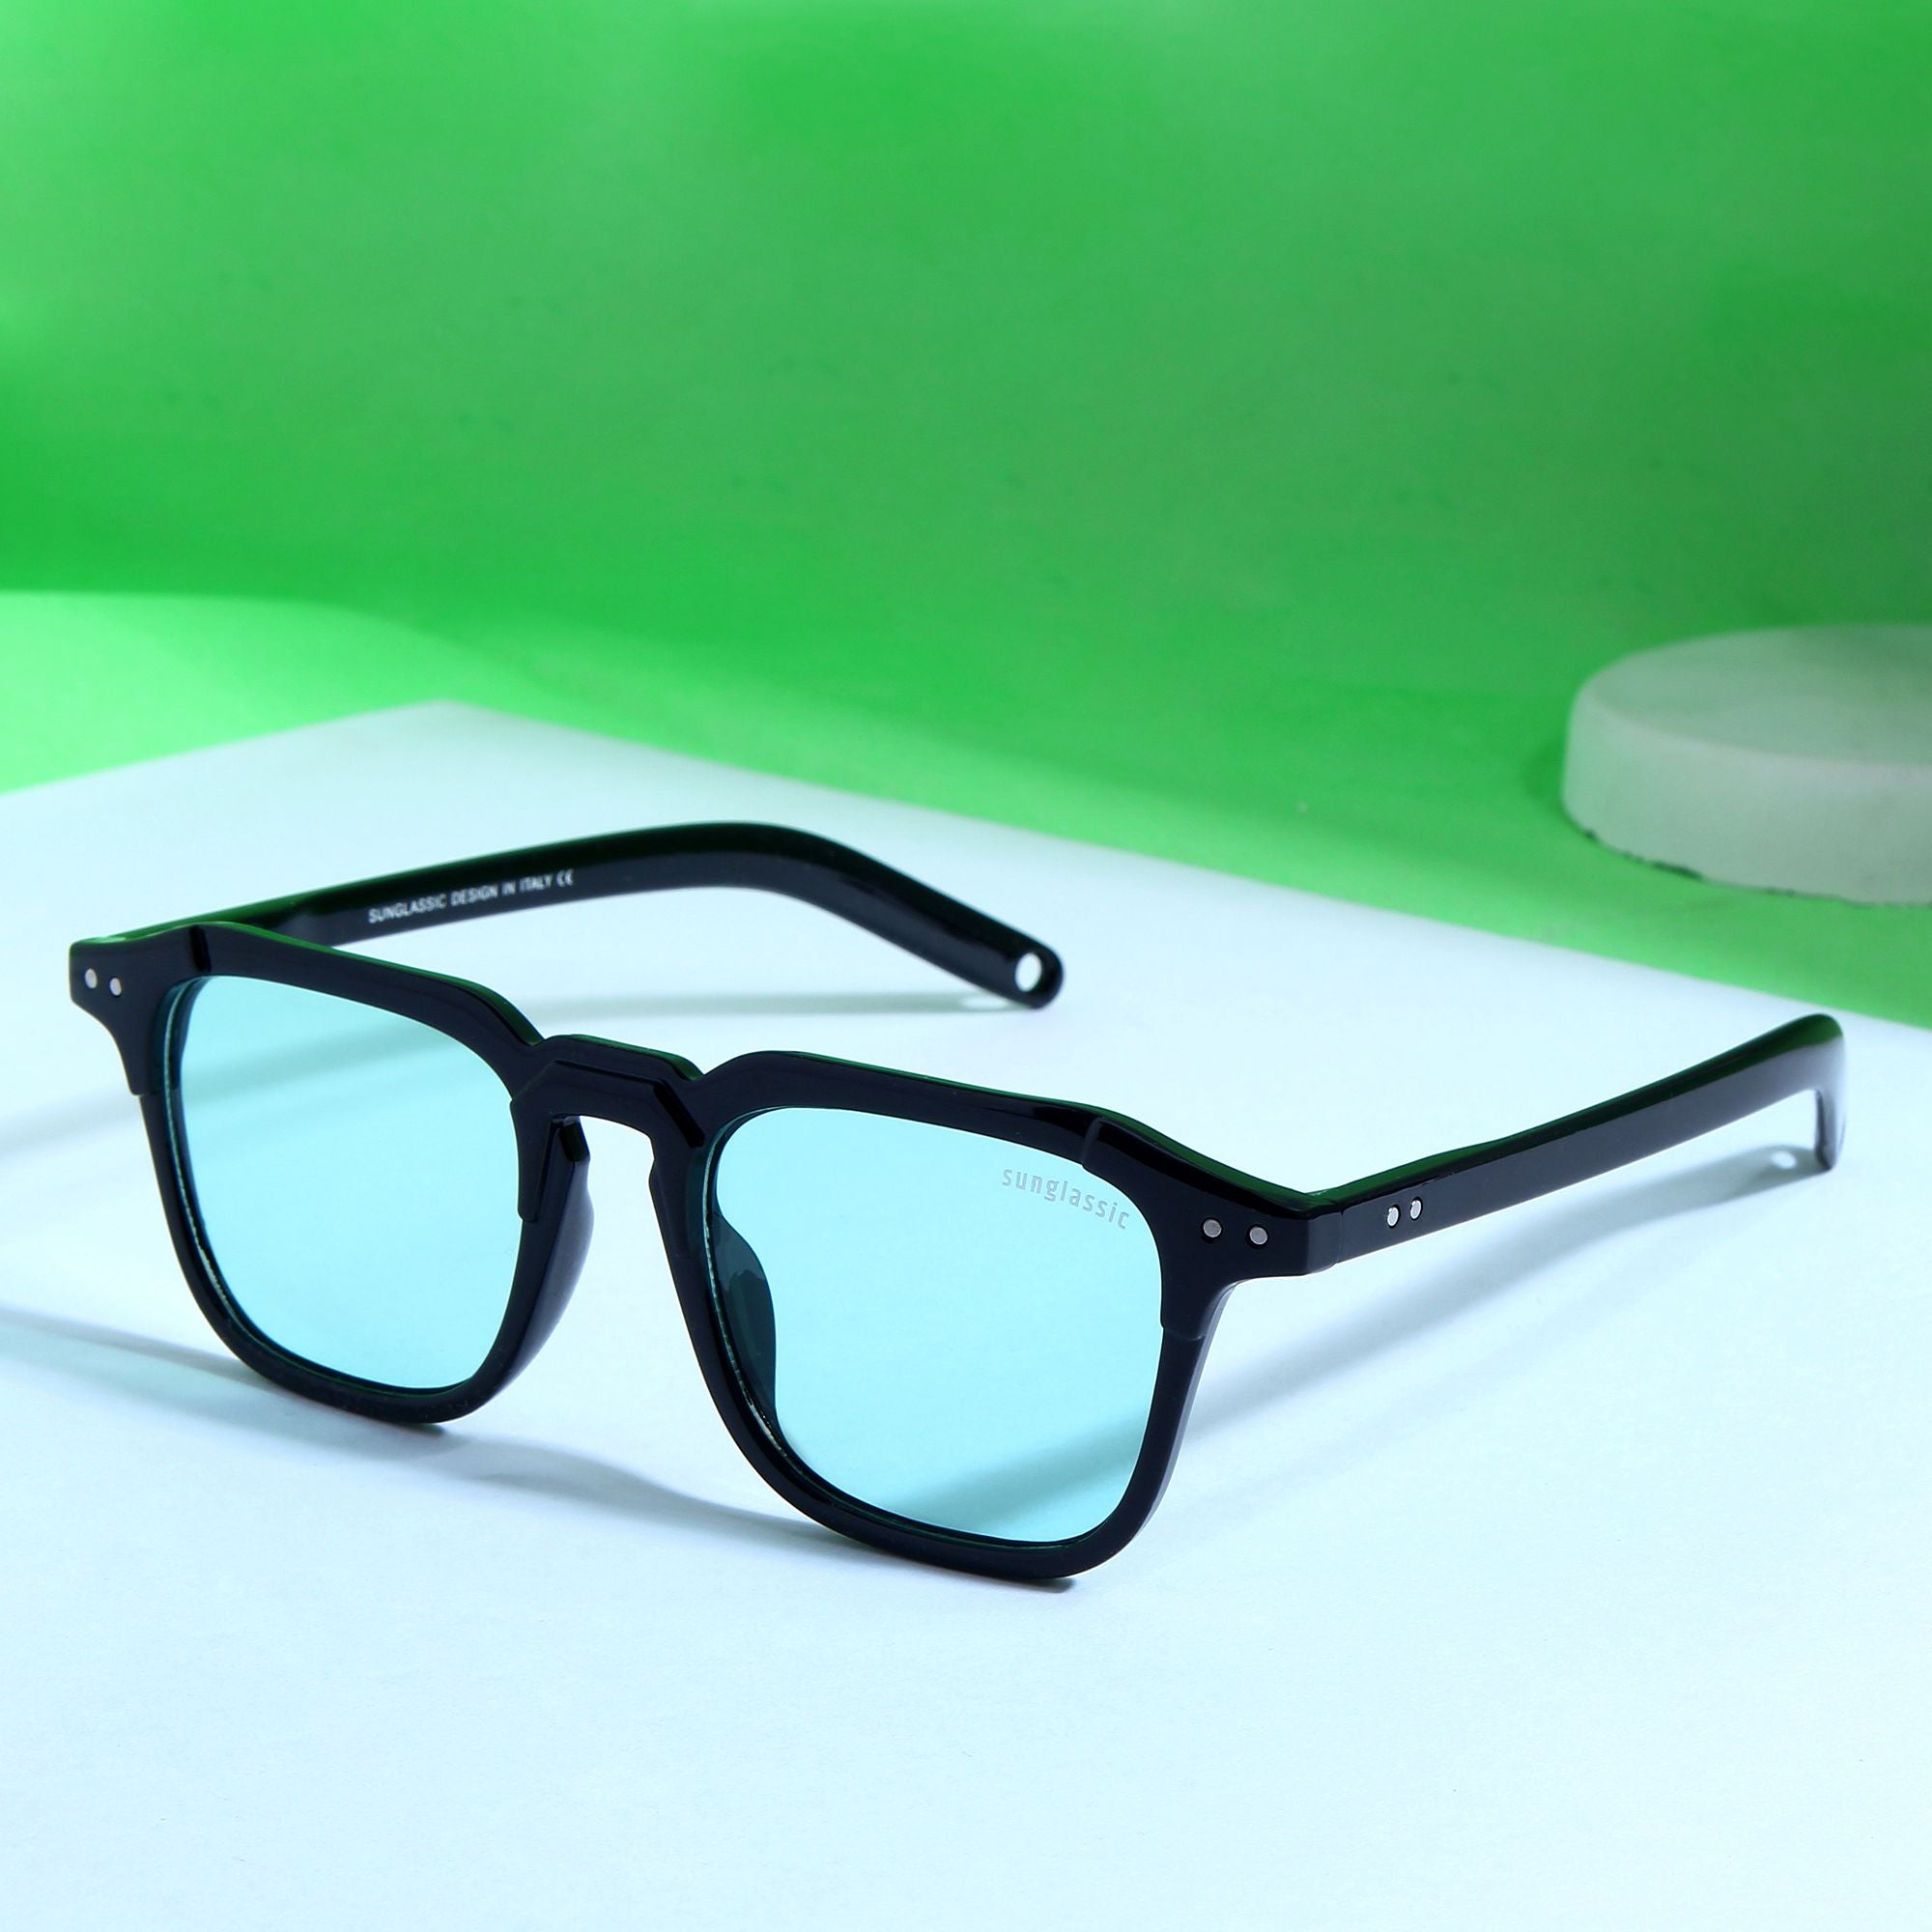 Kingsman black green square sunglasses side view - Sunglassic